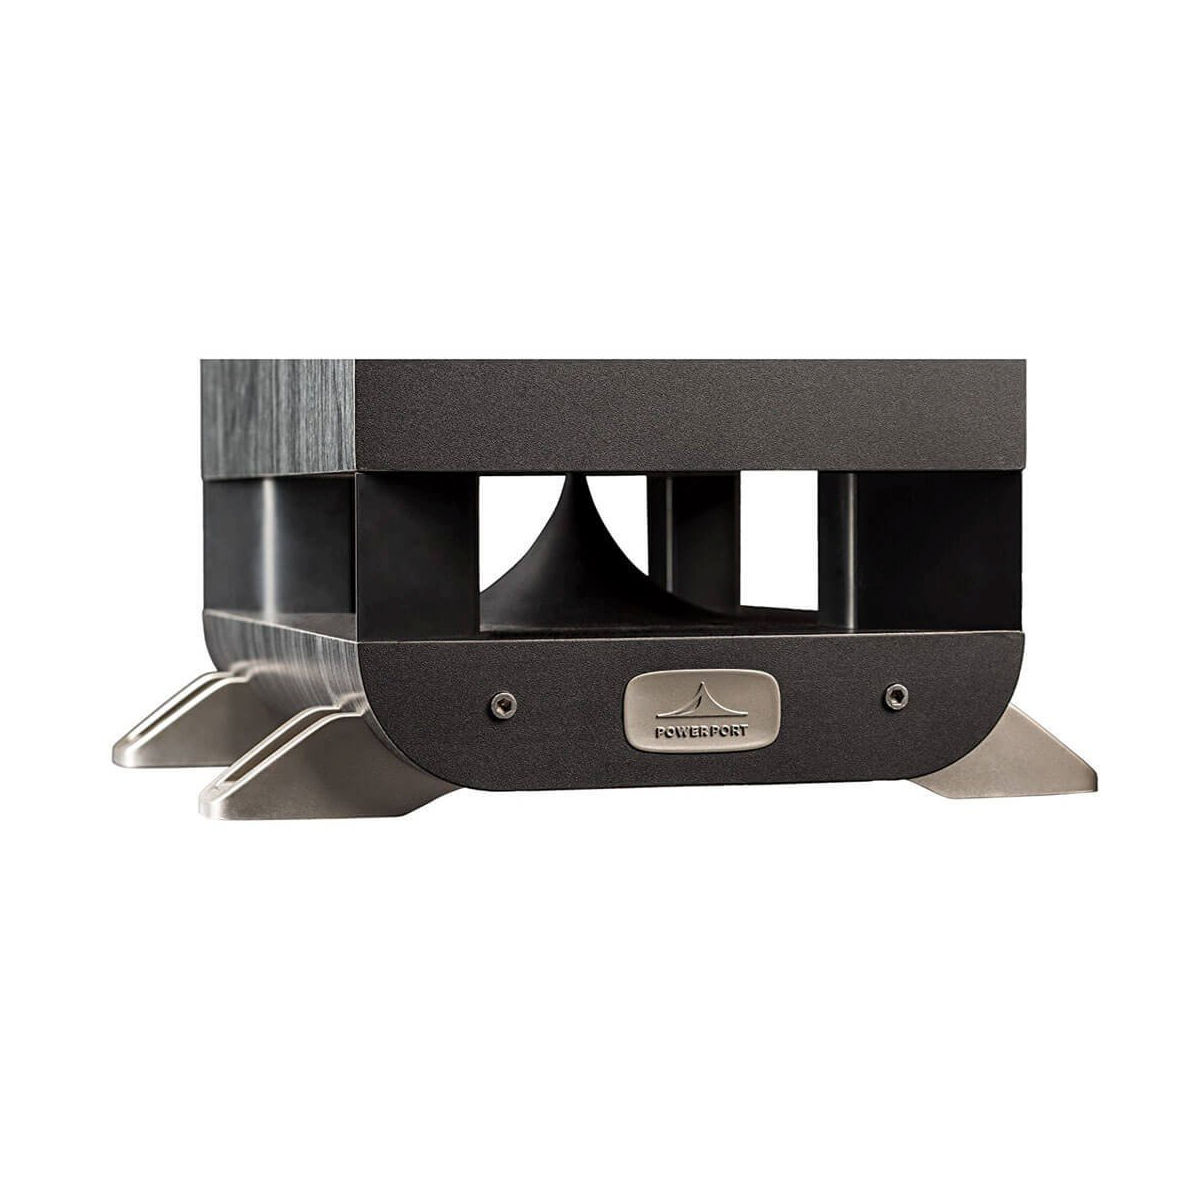 Polk Audio Signature S55 - Floor Standing Speaker - Pair - AVStore